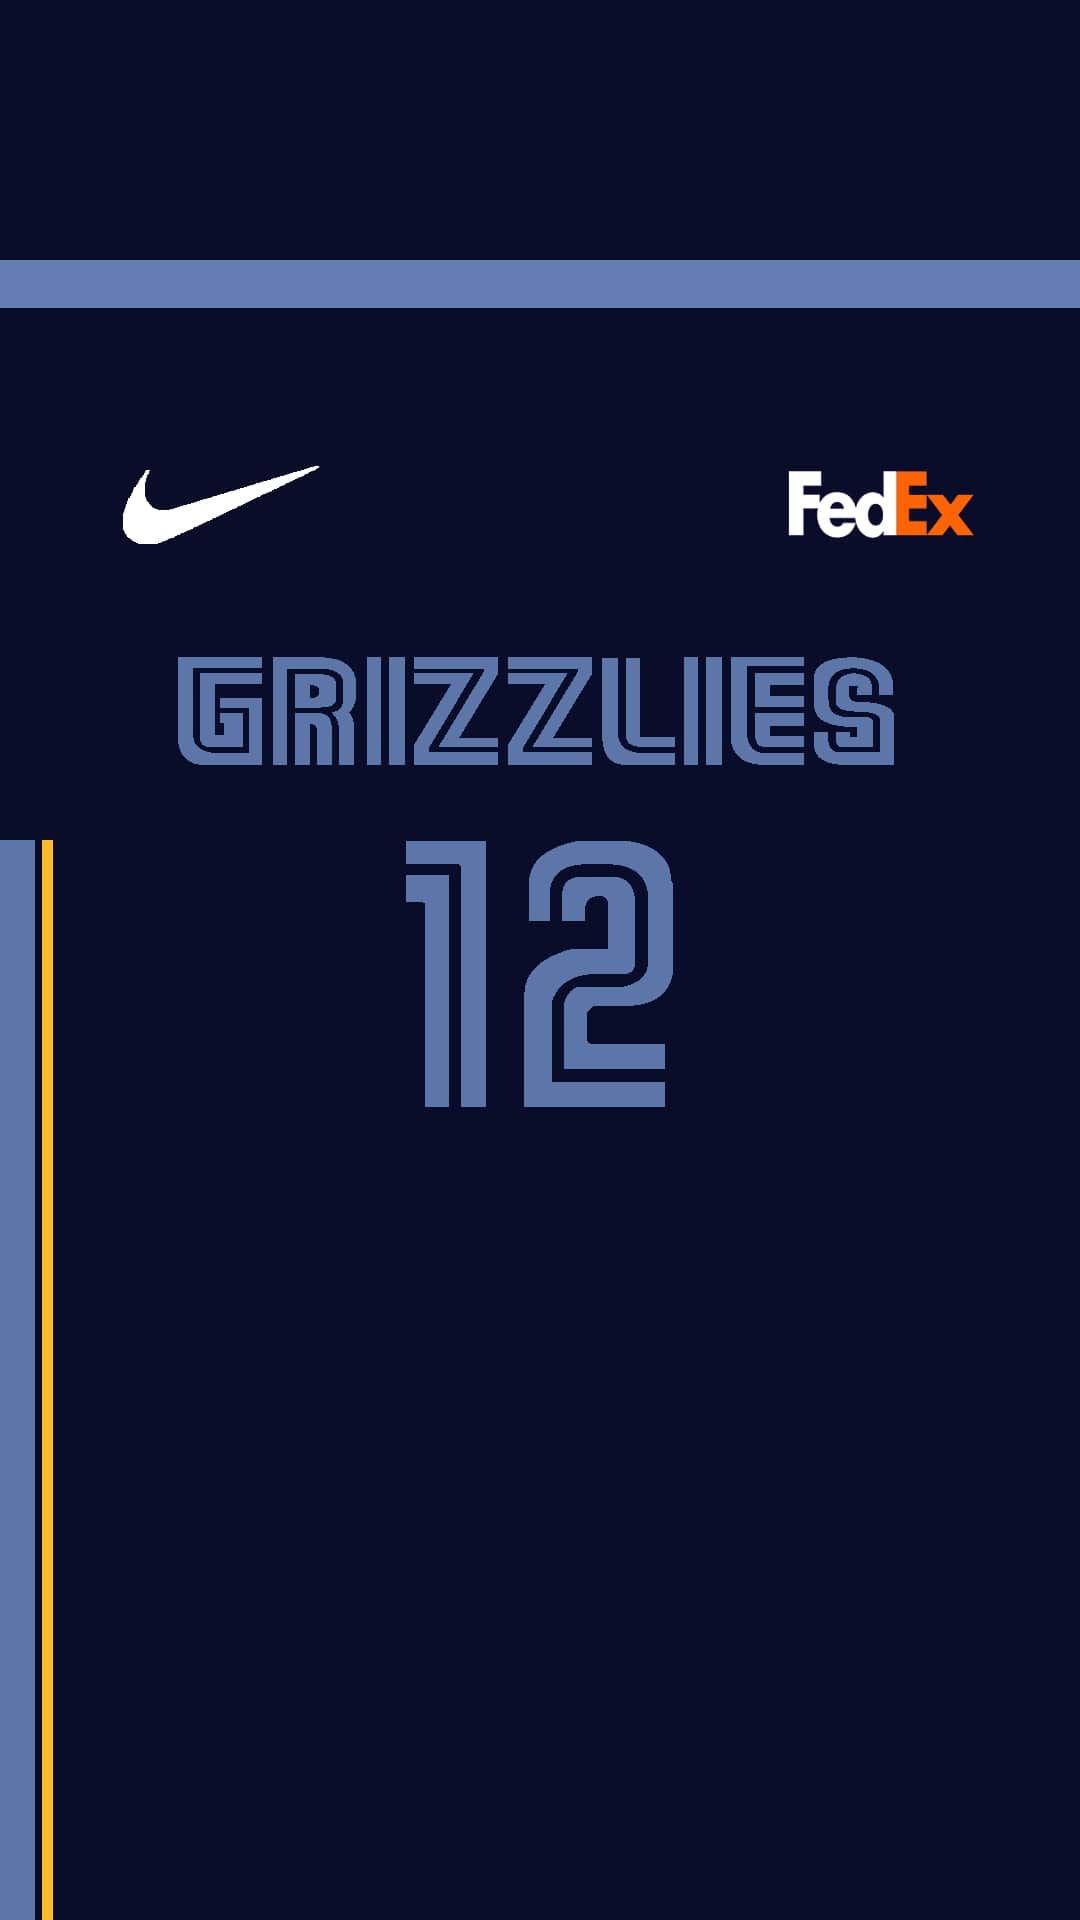 Grizzlies Morant. Nba wallpaper, Nba jersey, Memphis grizzlies basketball